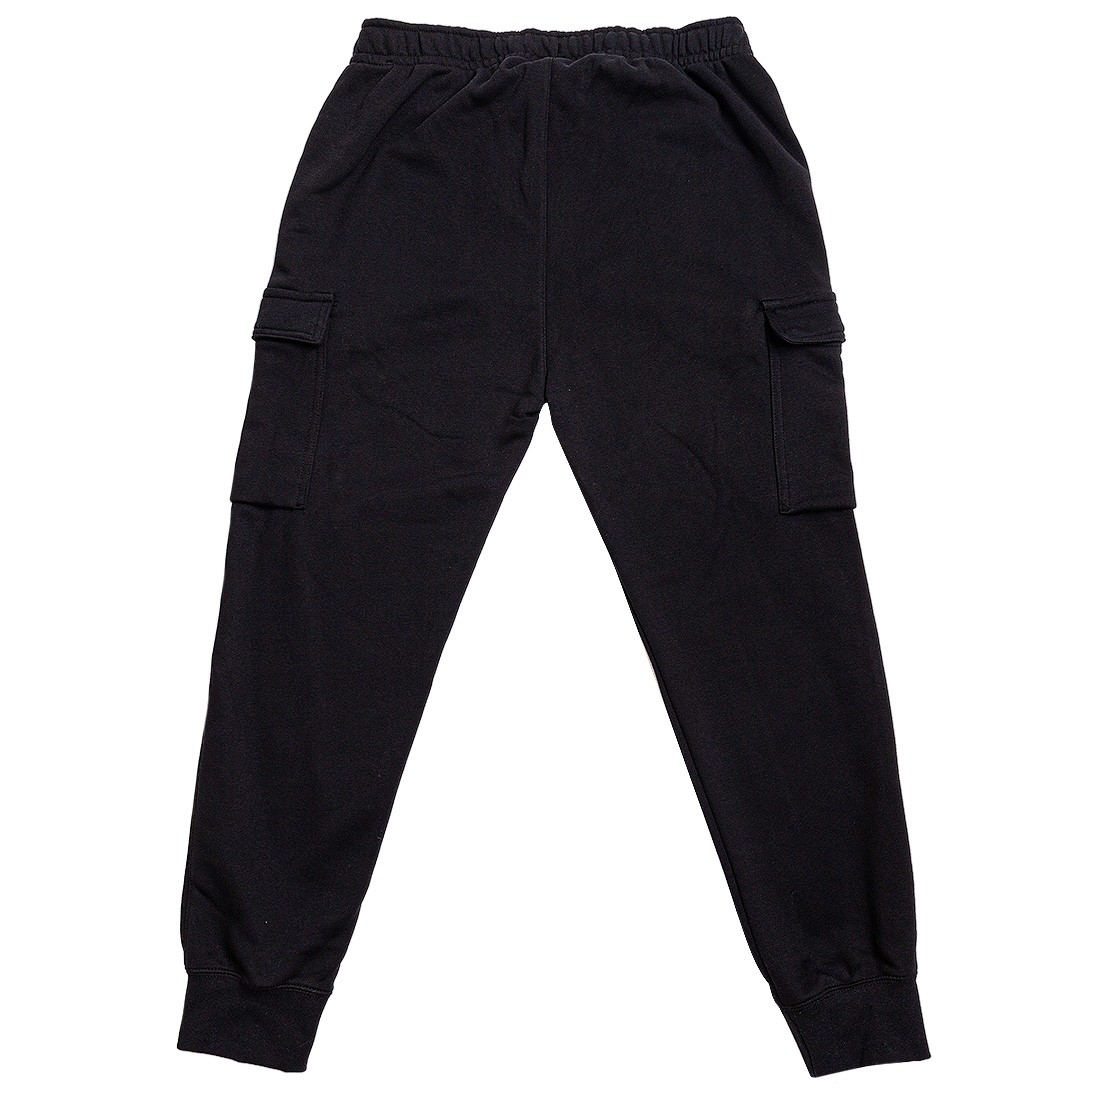 nike men sportswear club fleece cargo pants black black white